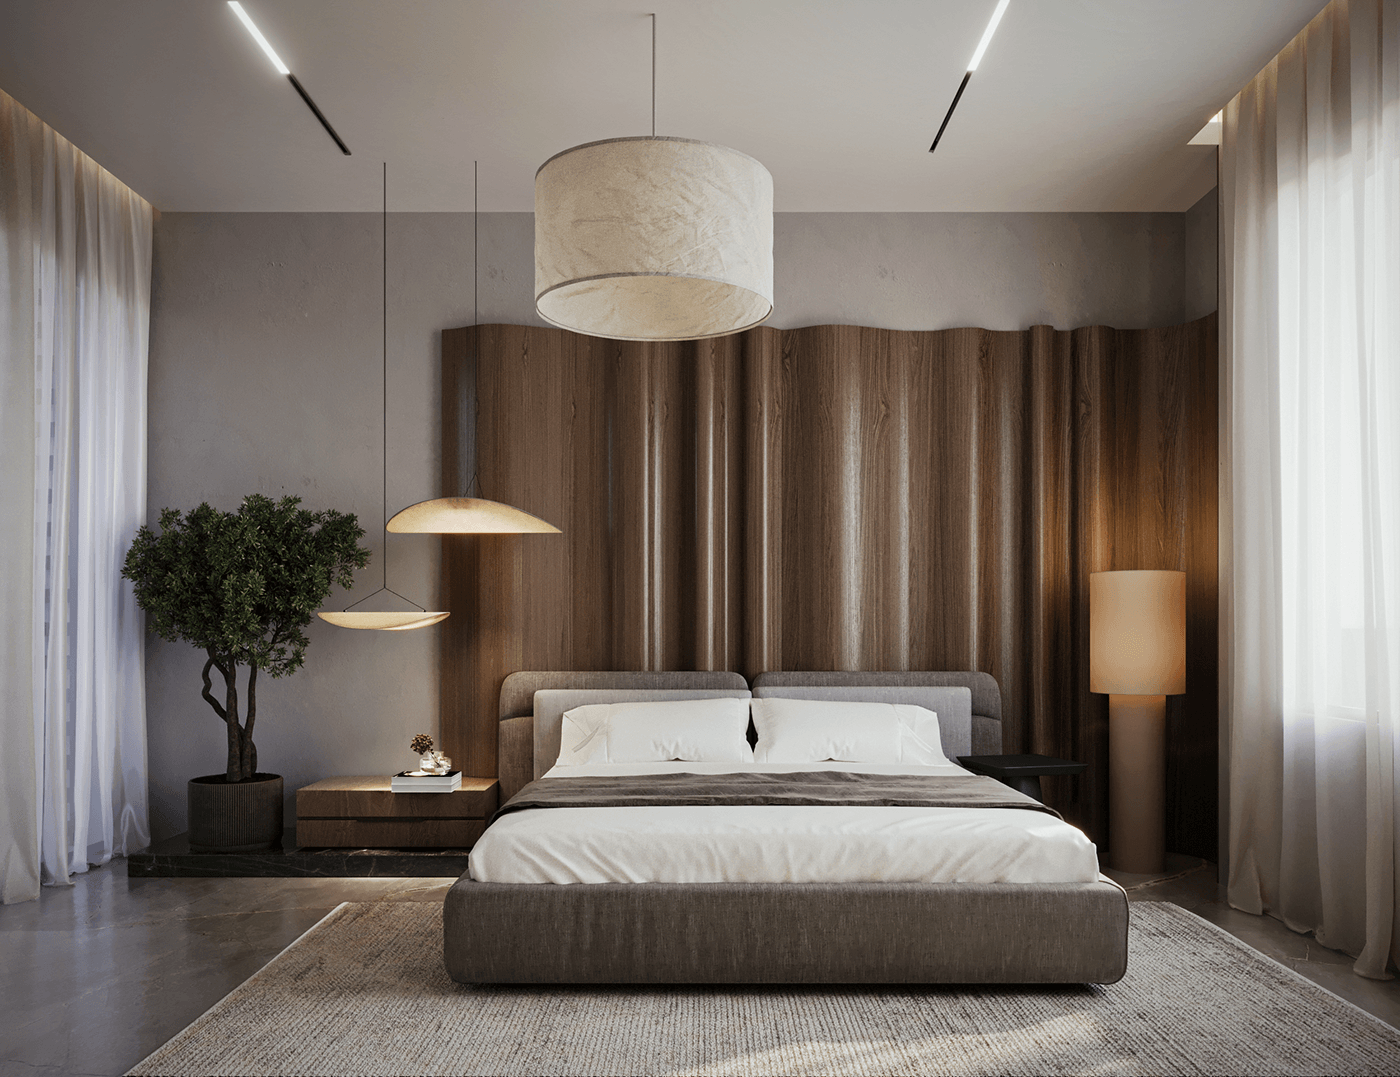 Interior design architecture Render minimal home decor